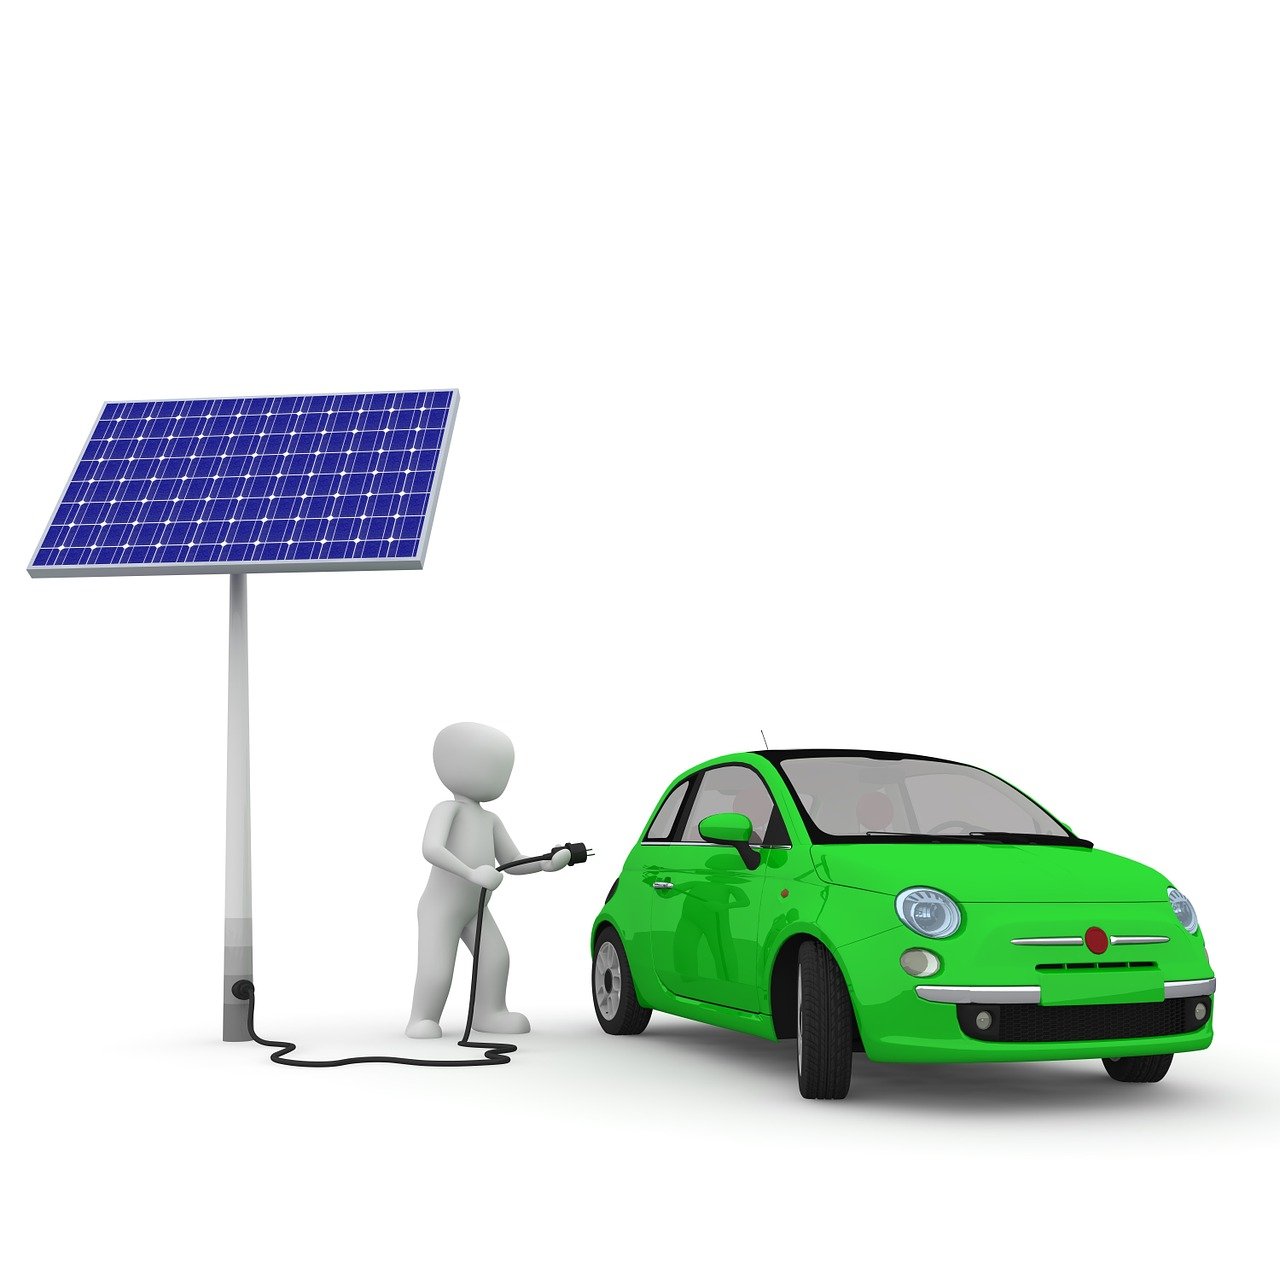 solar power, alternative energy, solar panel